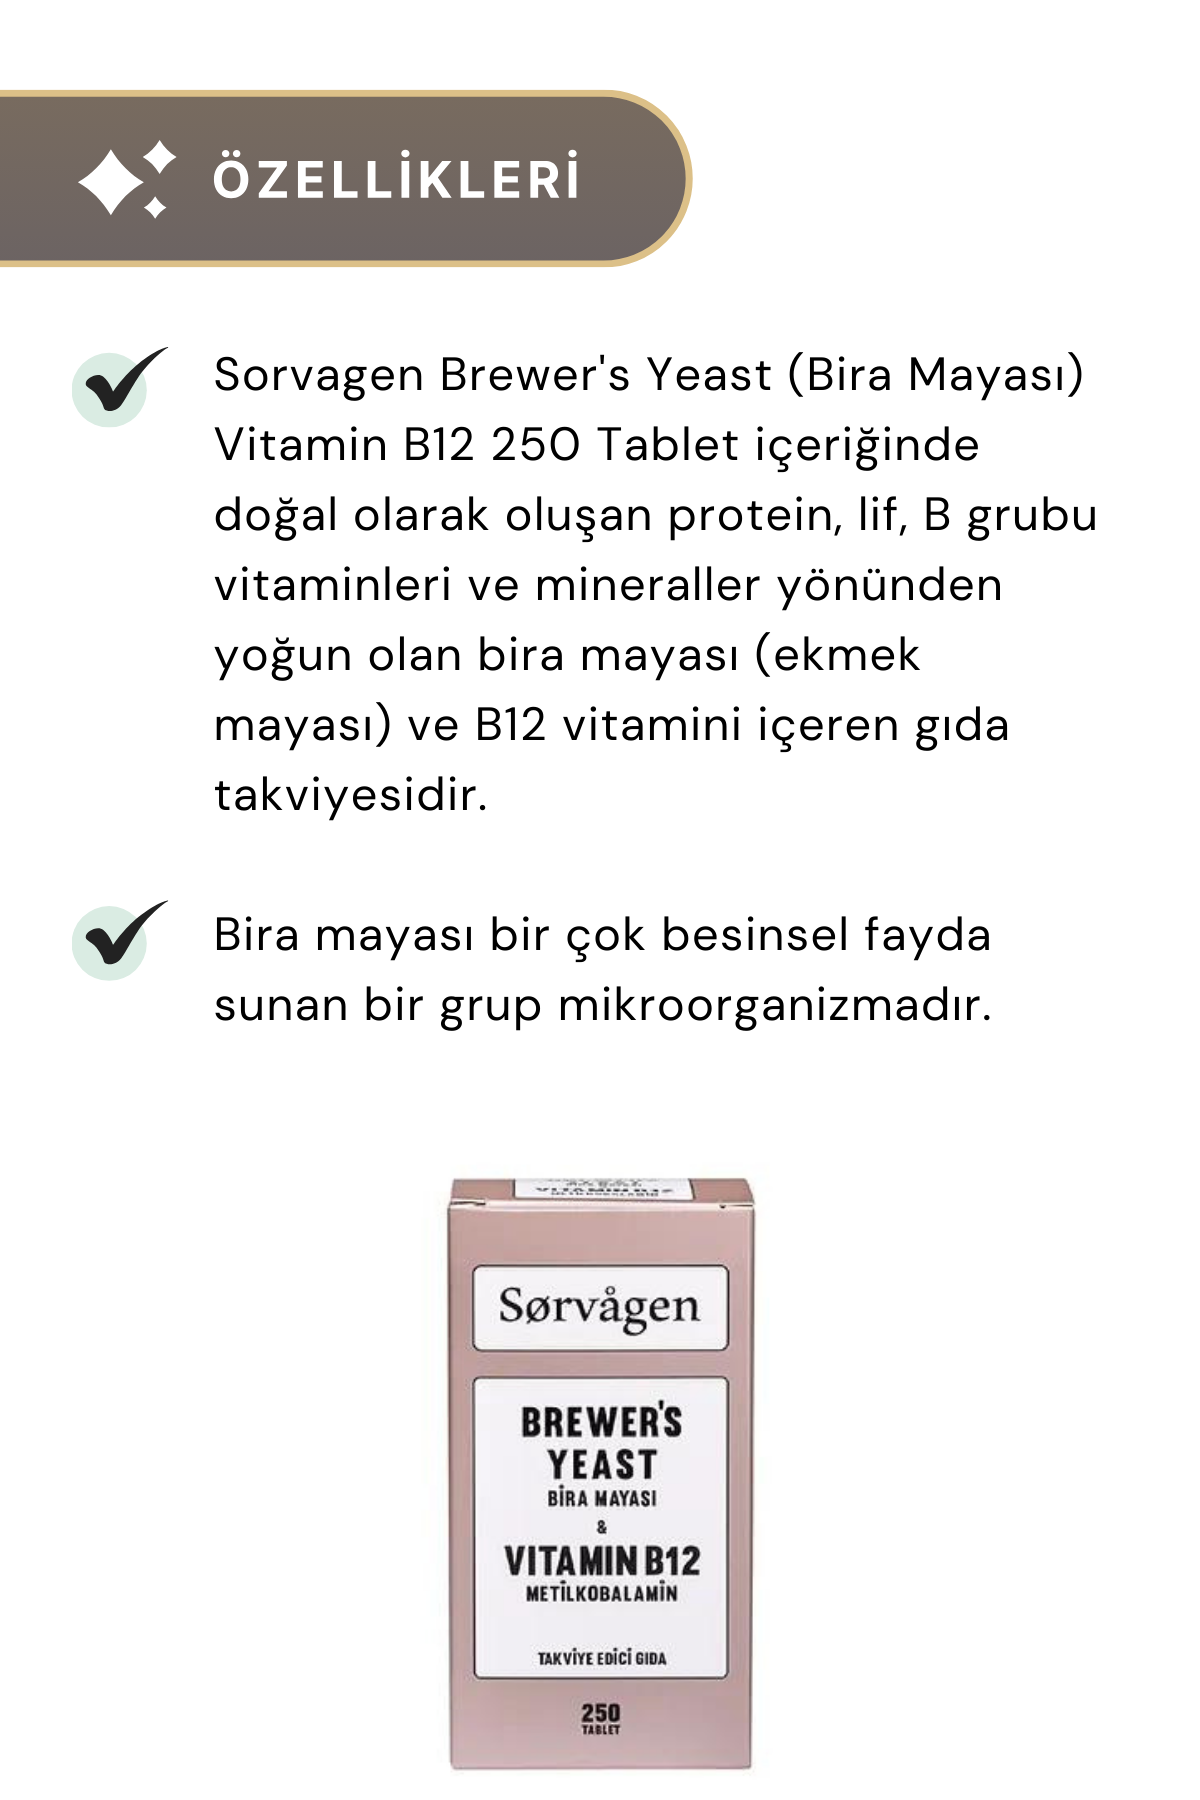 Sorvagen Brewer's Yeast (Bira Mayası) Vitamin B12 250 Tablet 2'li Paket